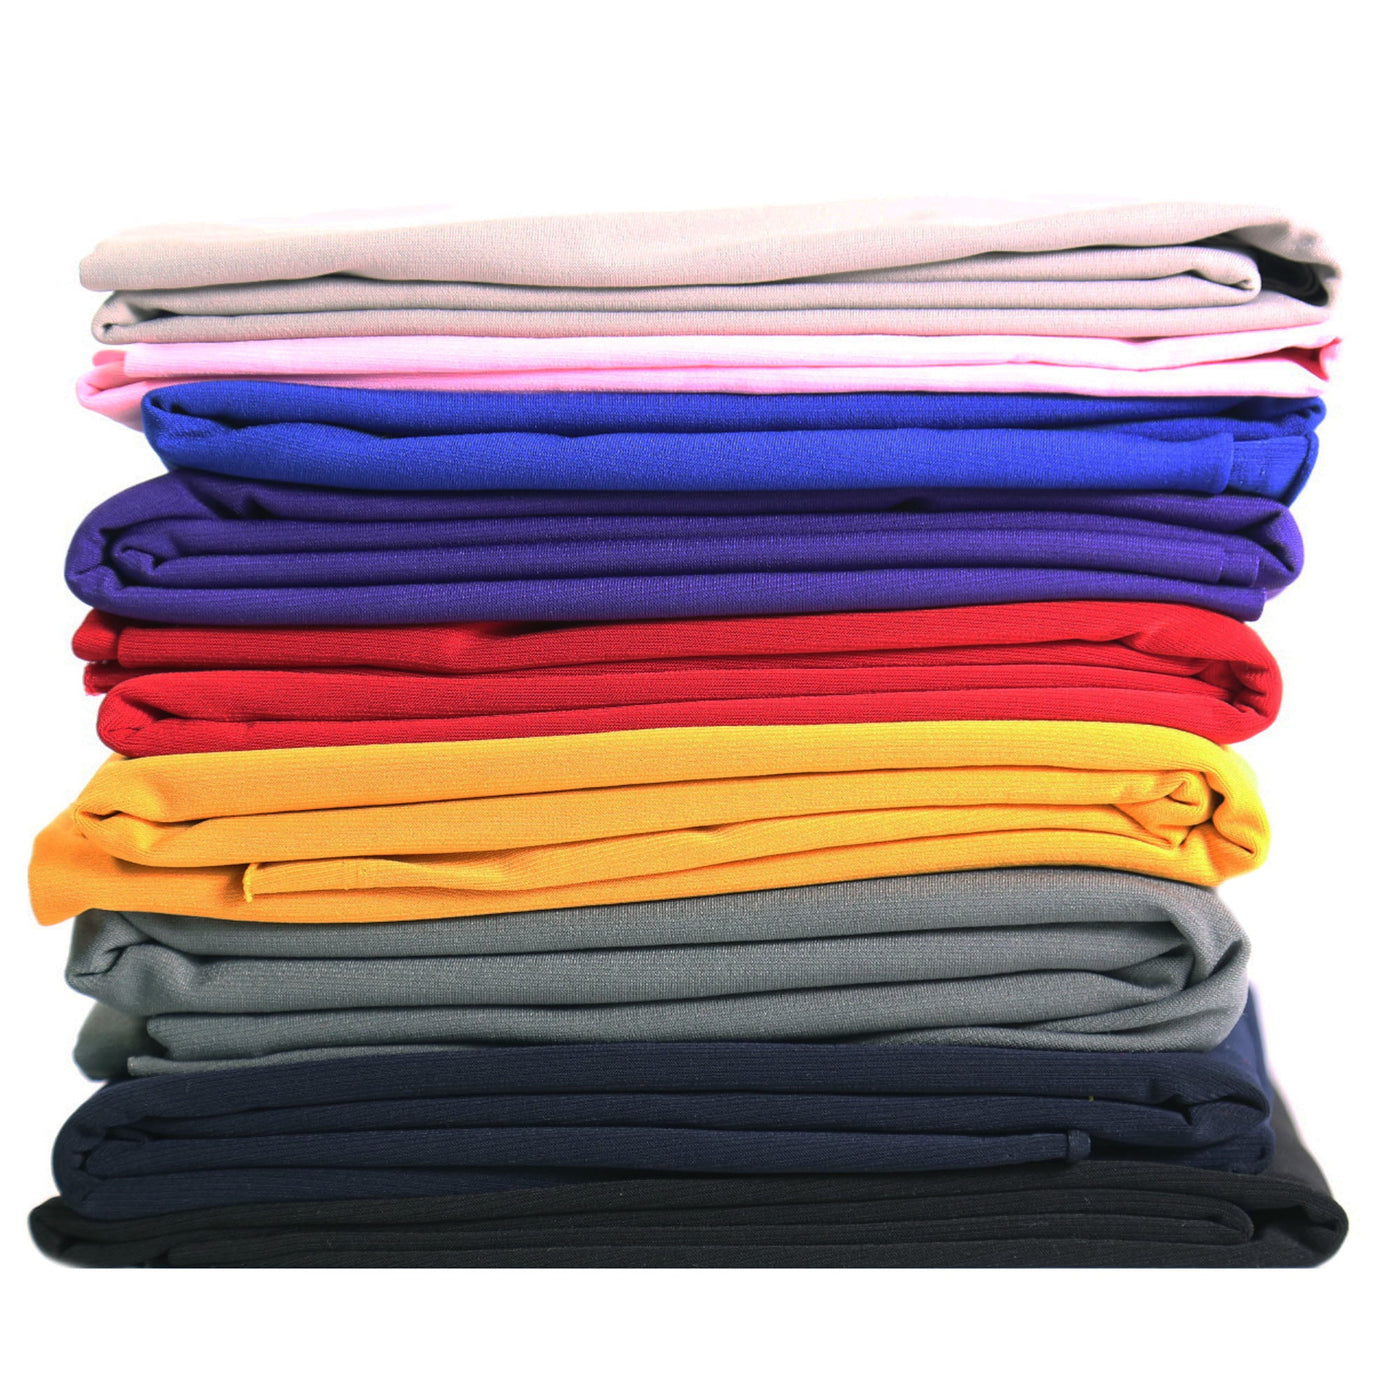 ITY Polyester Spandex Fabric | Purple - FabricLA.com